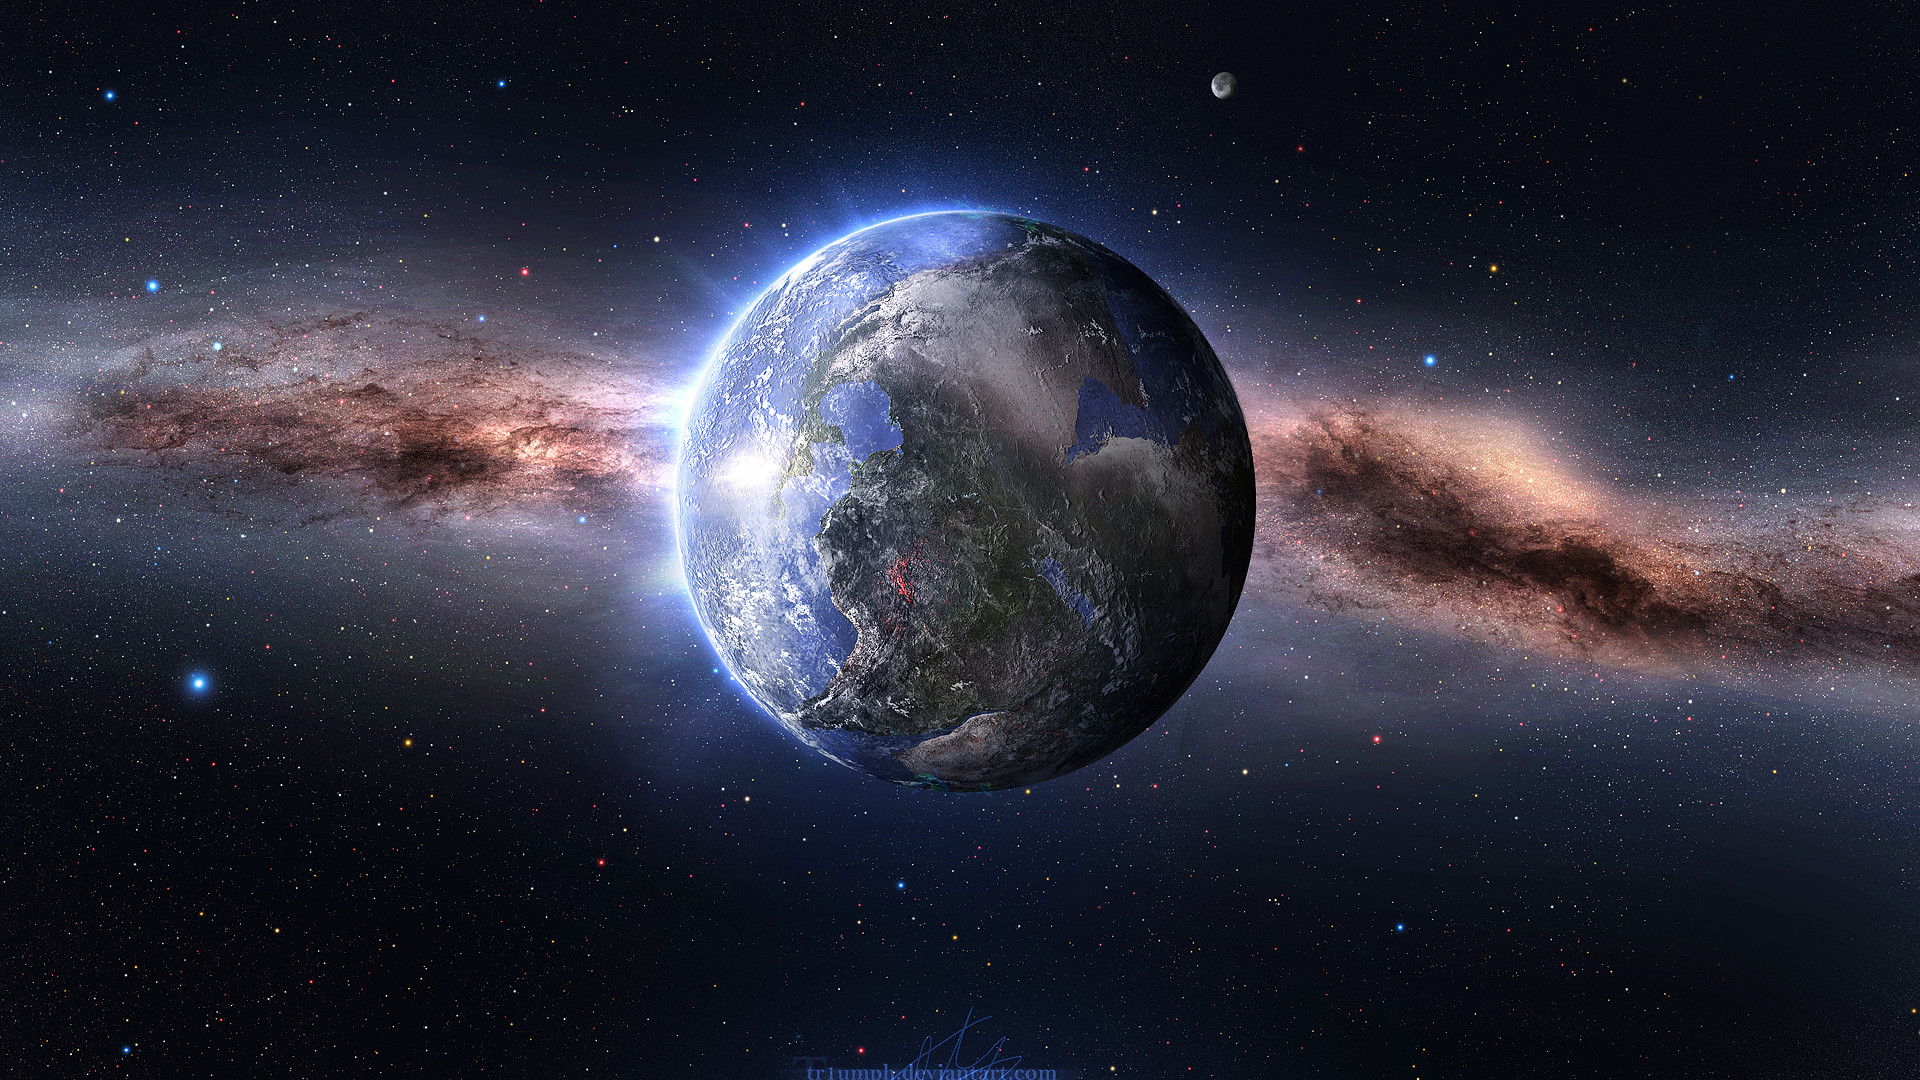 planeta fondos de pantalla hd,espacio exterior,atmósfera,planeta,objeto astronómico,universo